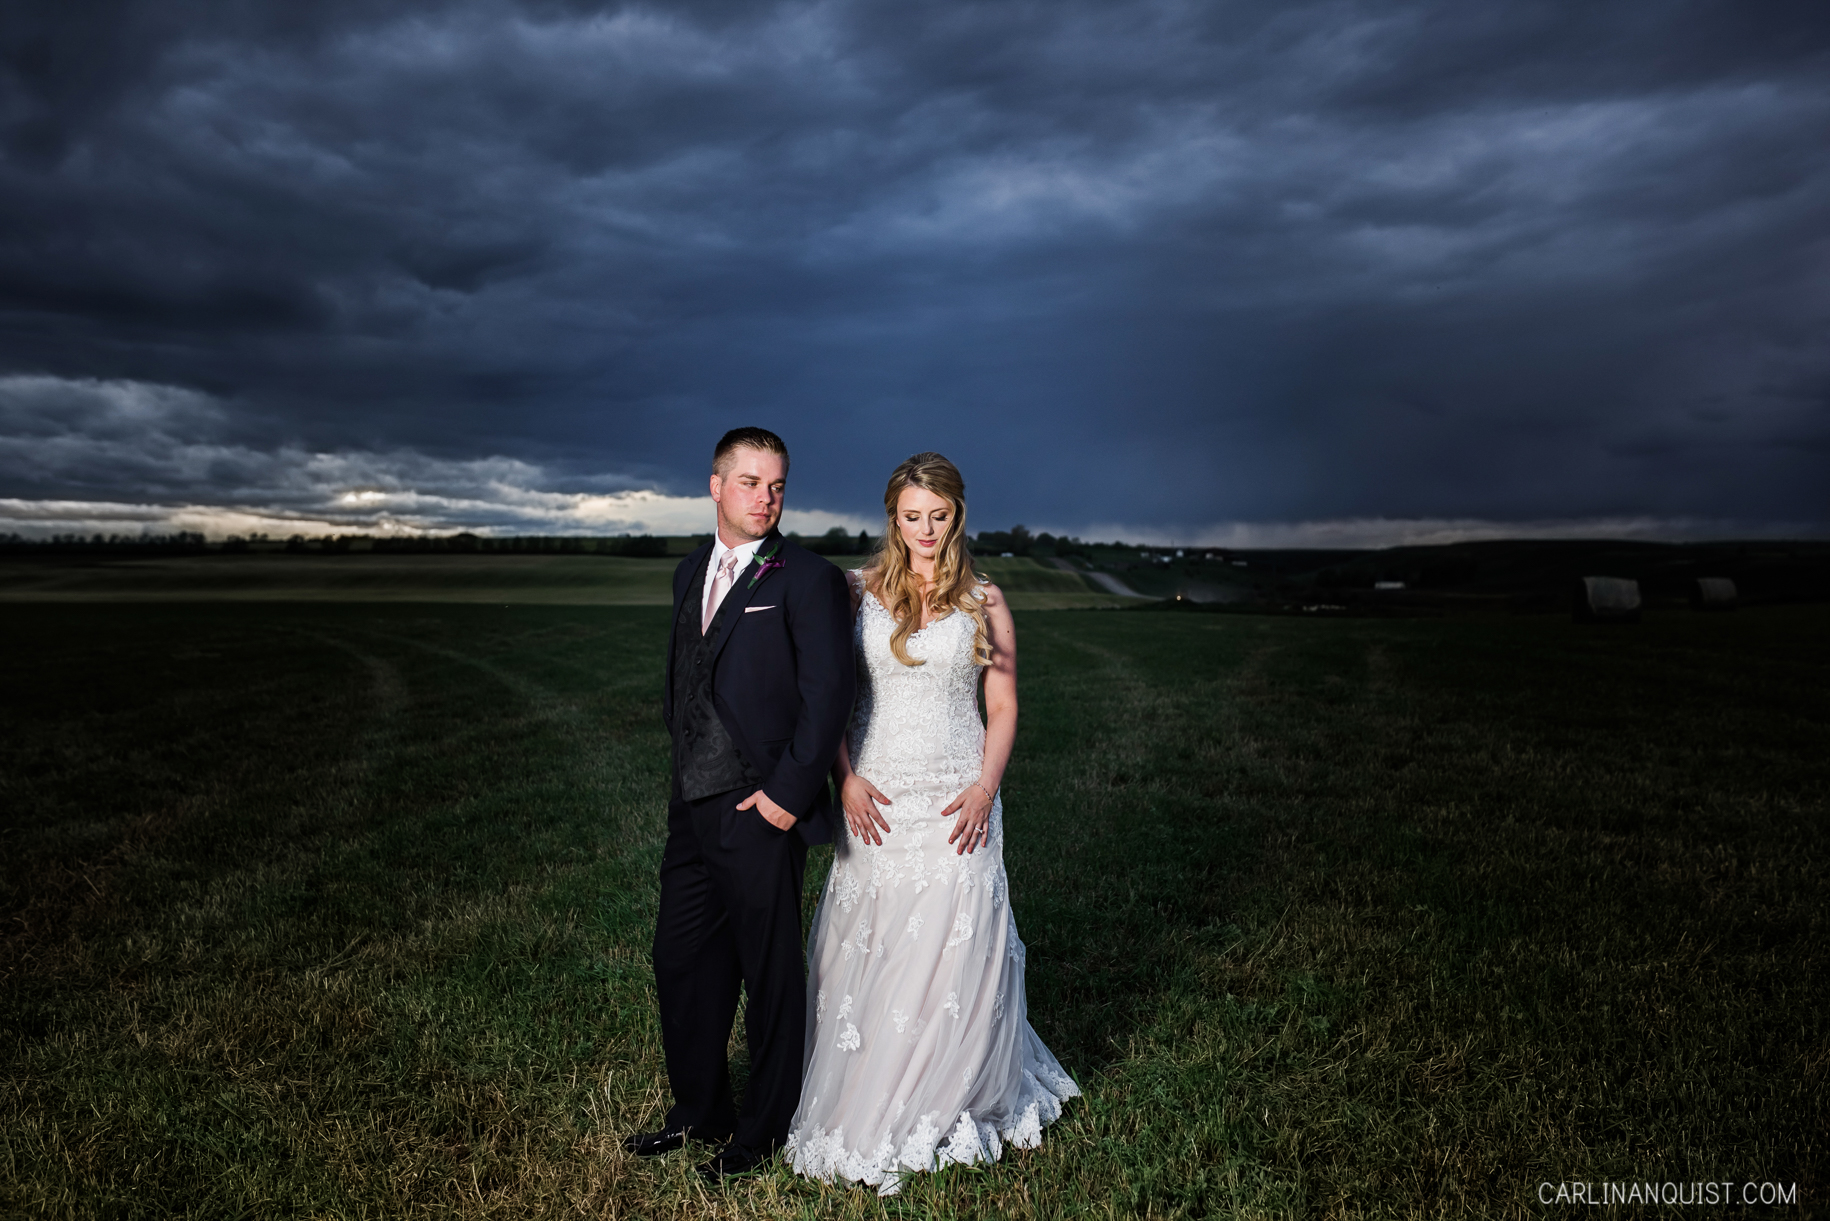 Apple Creek Golf Course Wedding Photographer